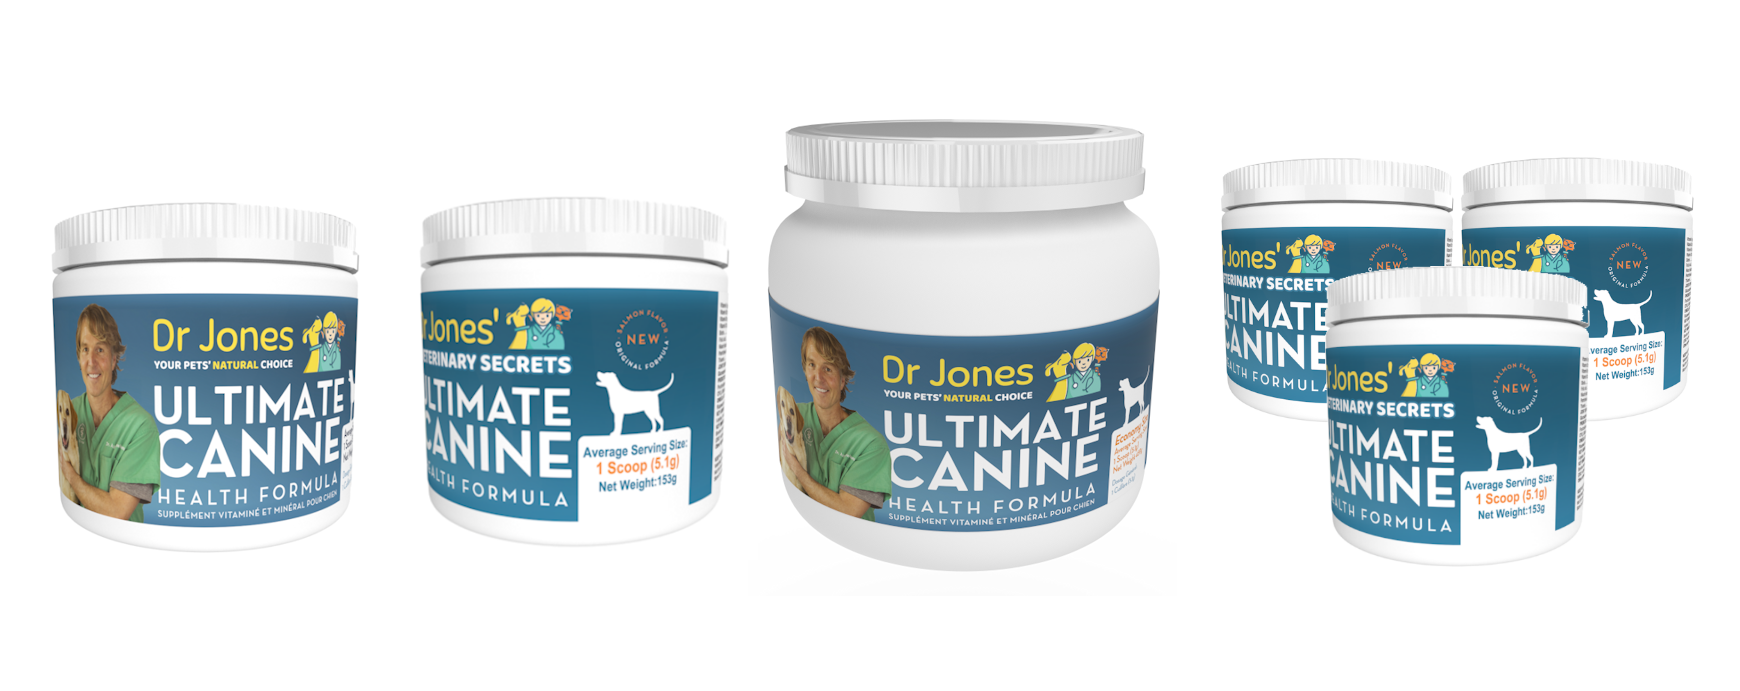 Dr. Jones' Ultimate Canine Health Formula (Original Formula)